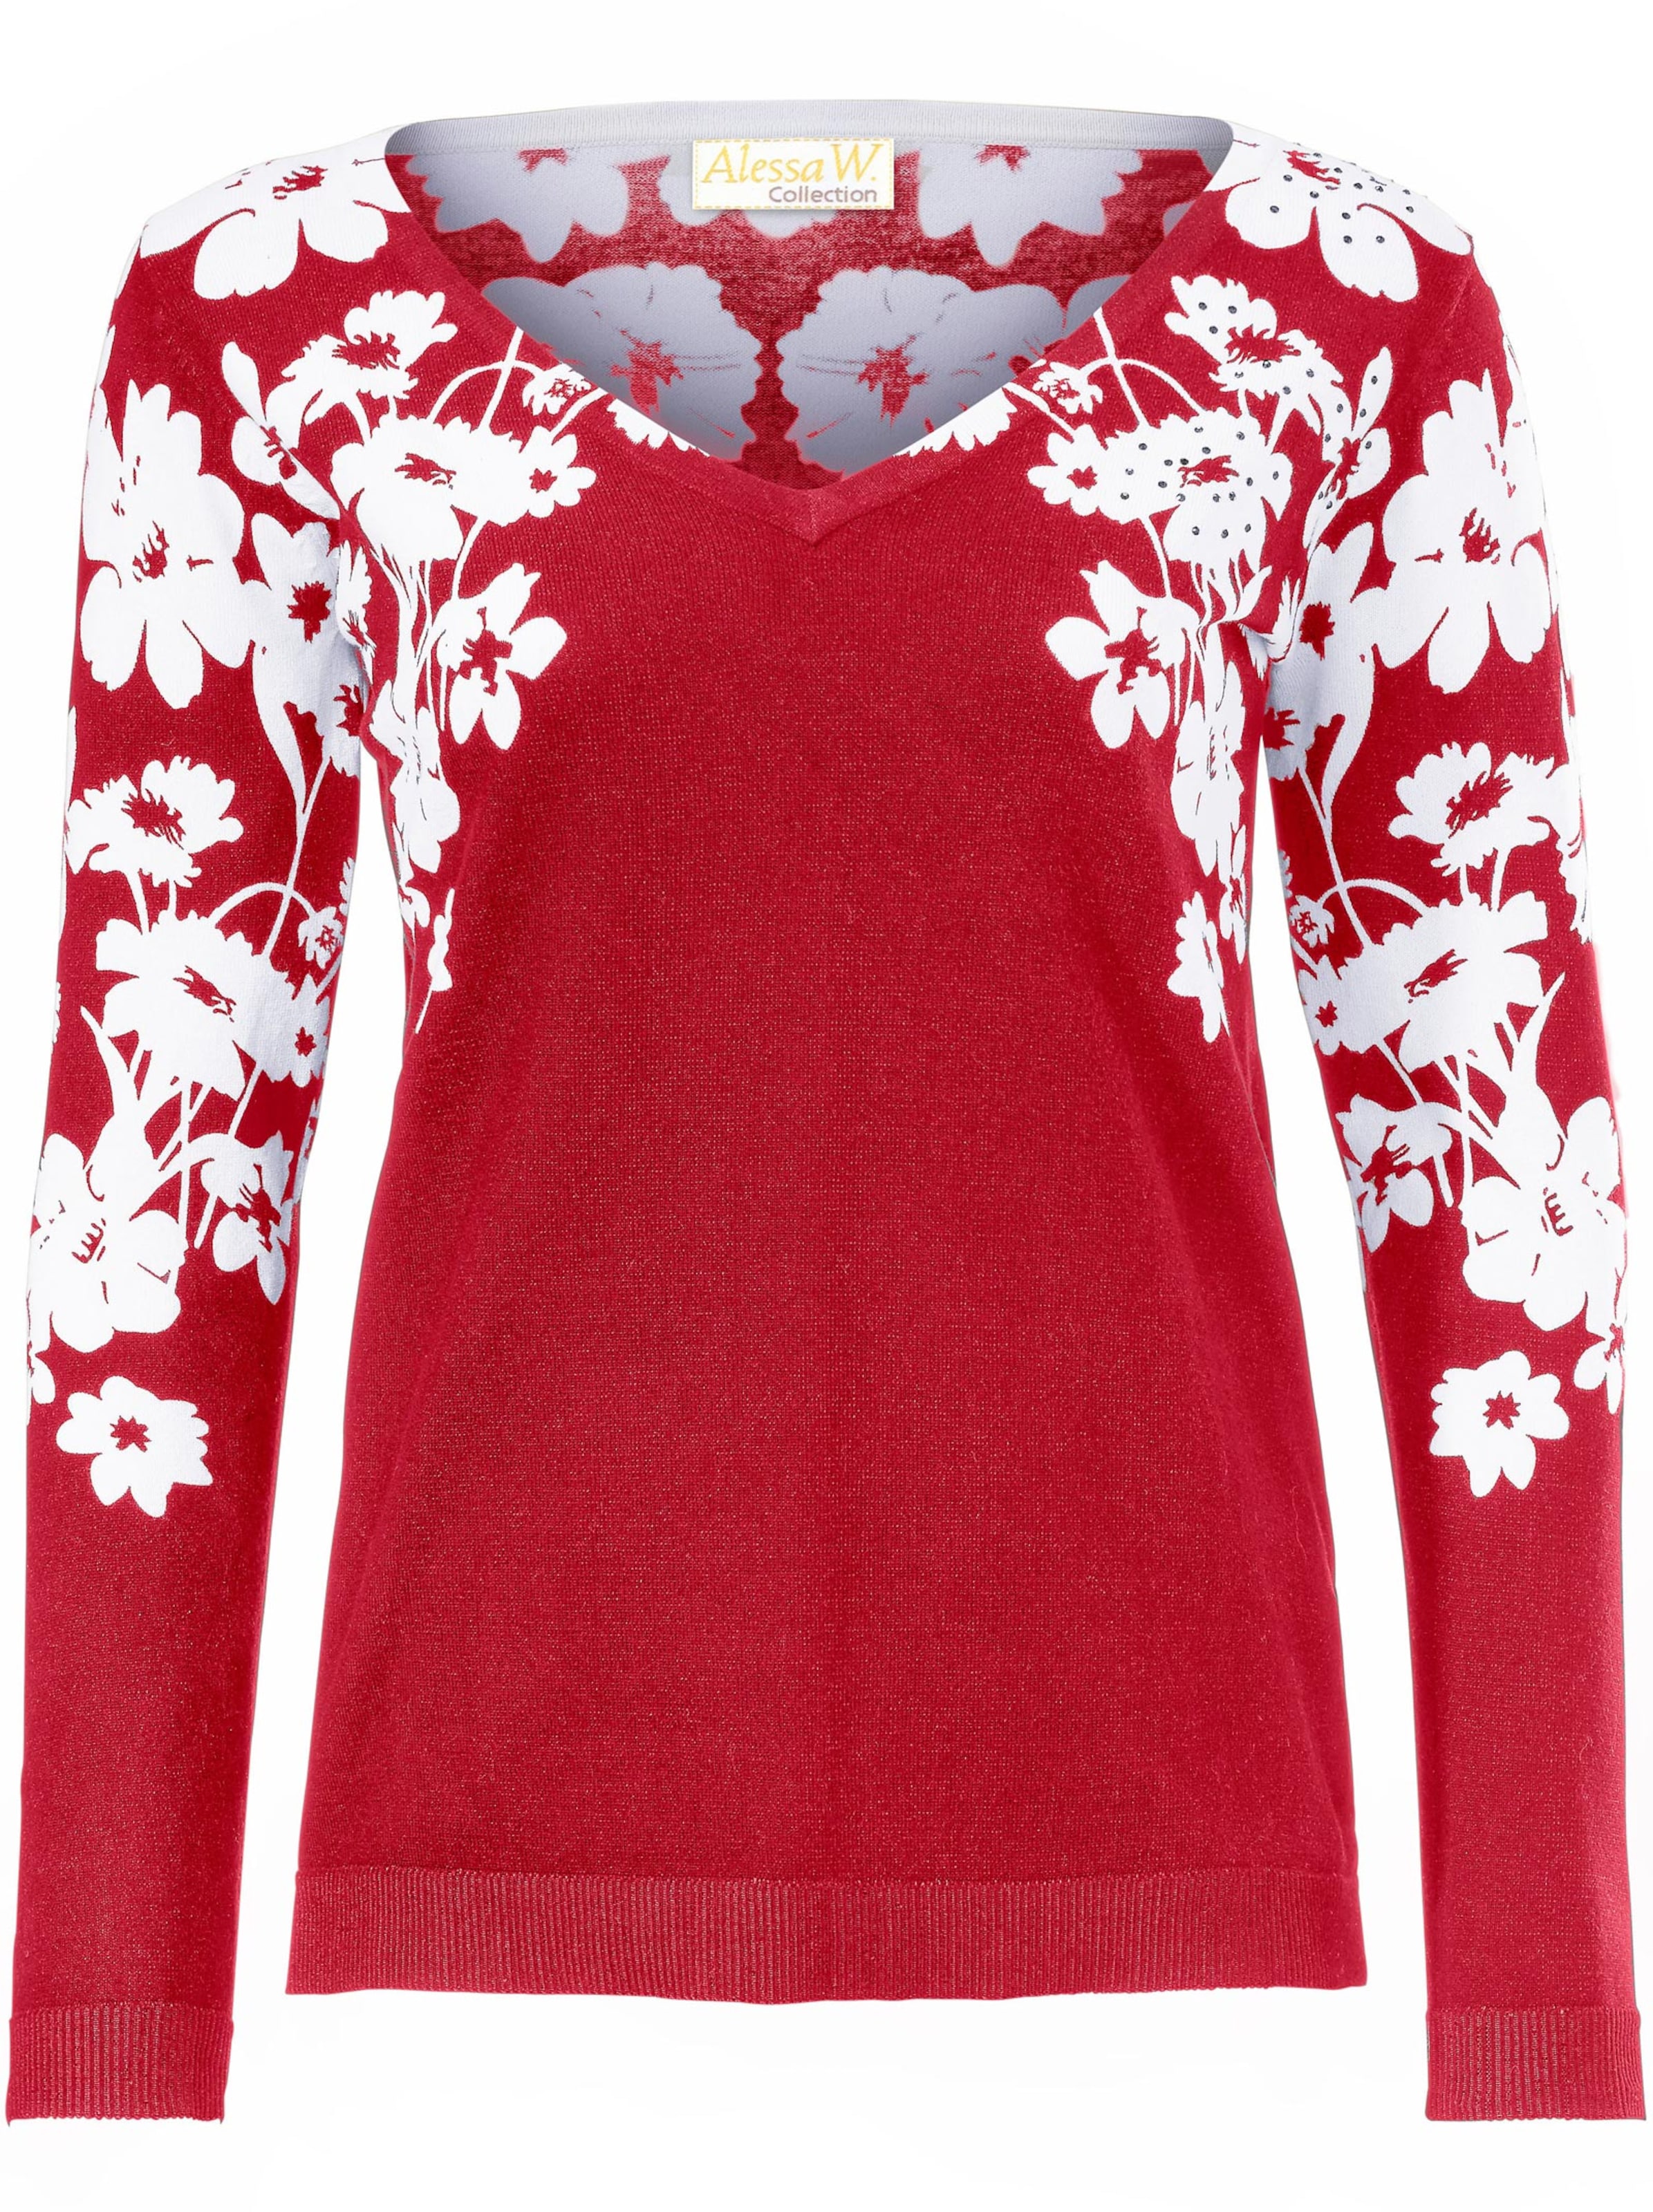 Damenmode Pullover Strickpullover in rot-weiß 